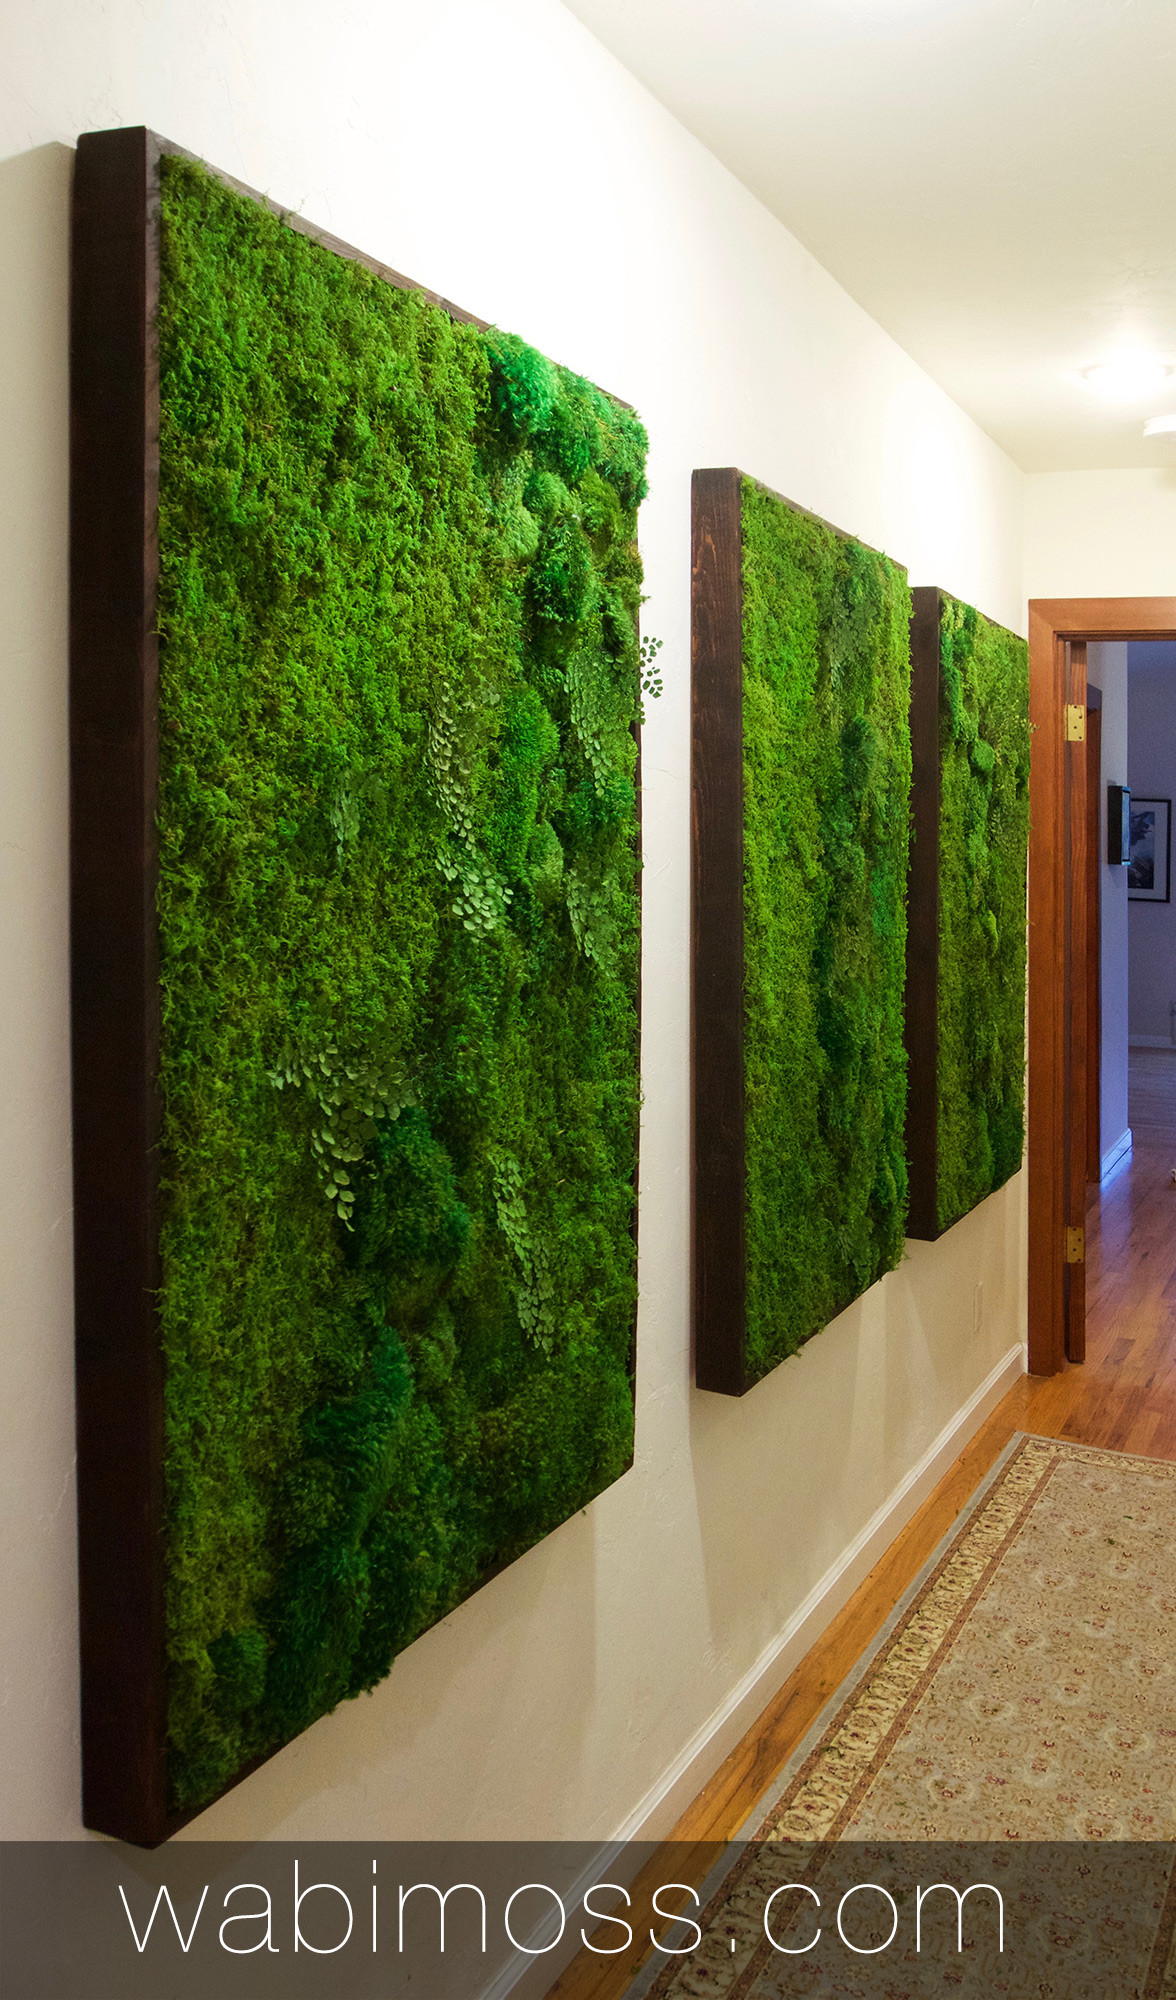 Best ideas about Moss Wall Art DIY
. Save or Pin Moss Wall Artwork for Interior Designers WabiMoss Now.